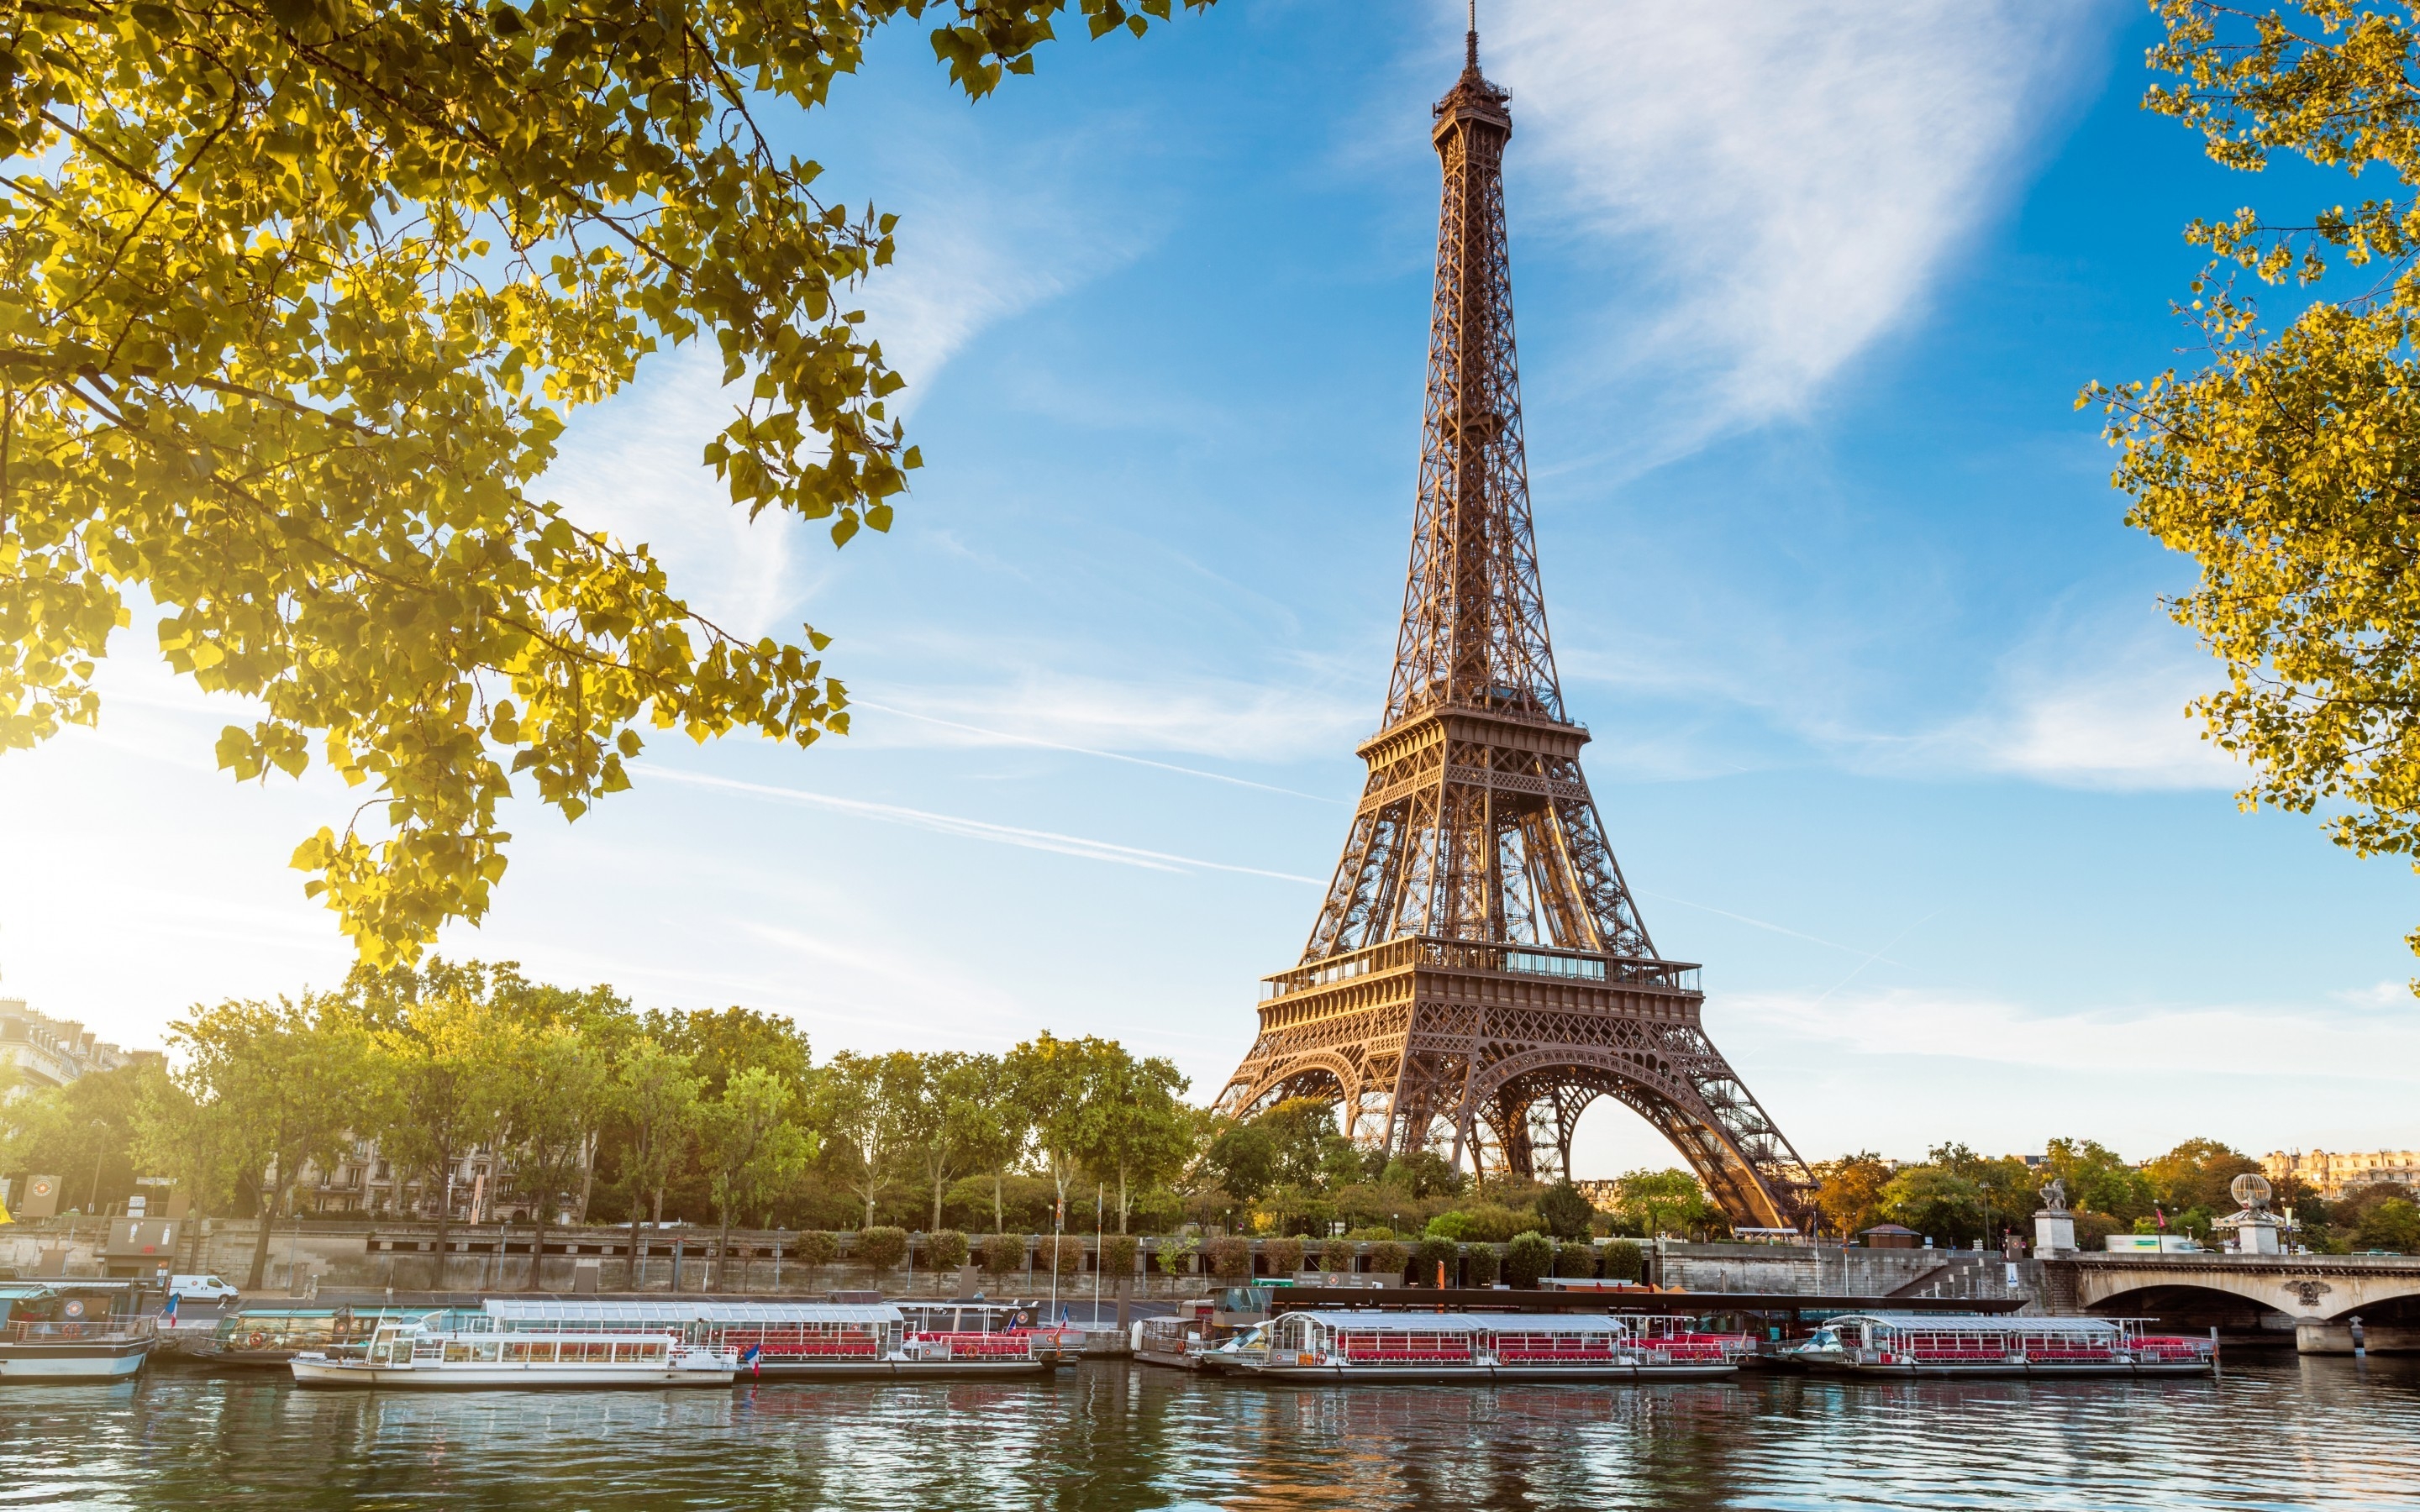 Eiffel Tower Landscape for 2880 x 1800 Retina Display resolution